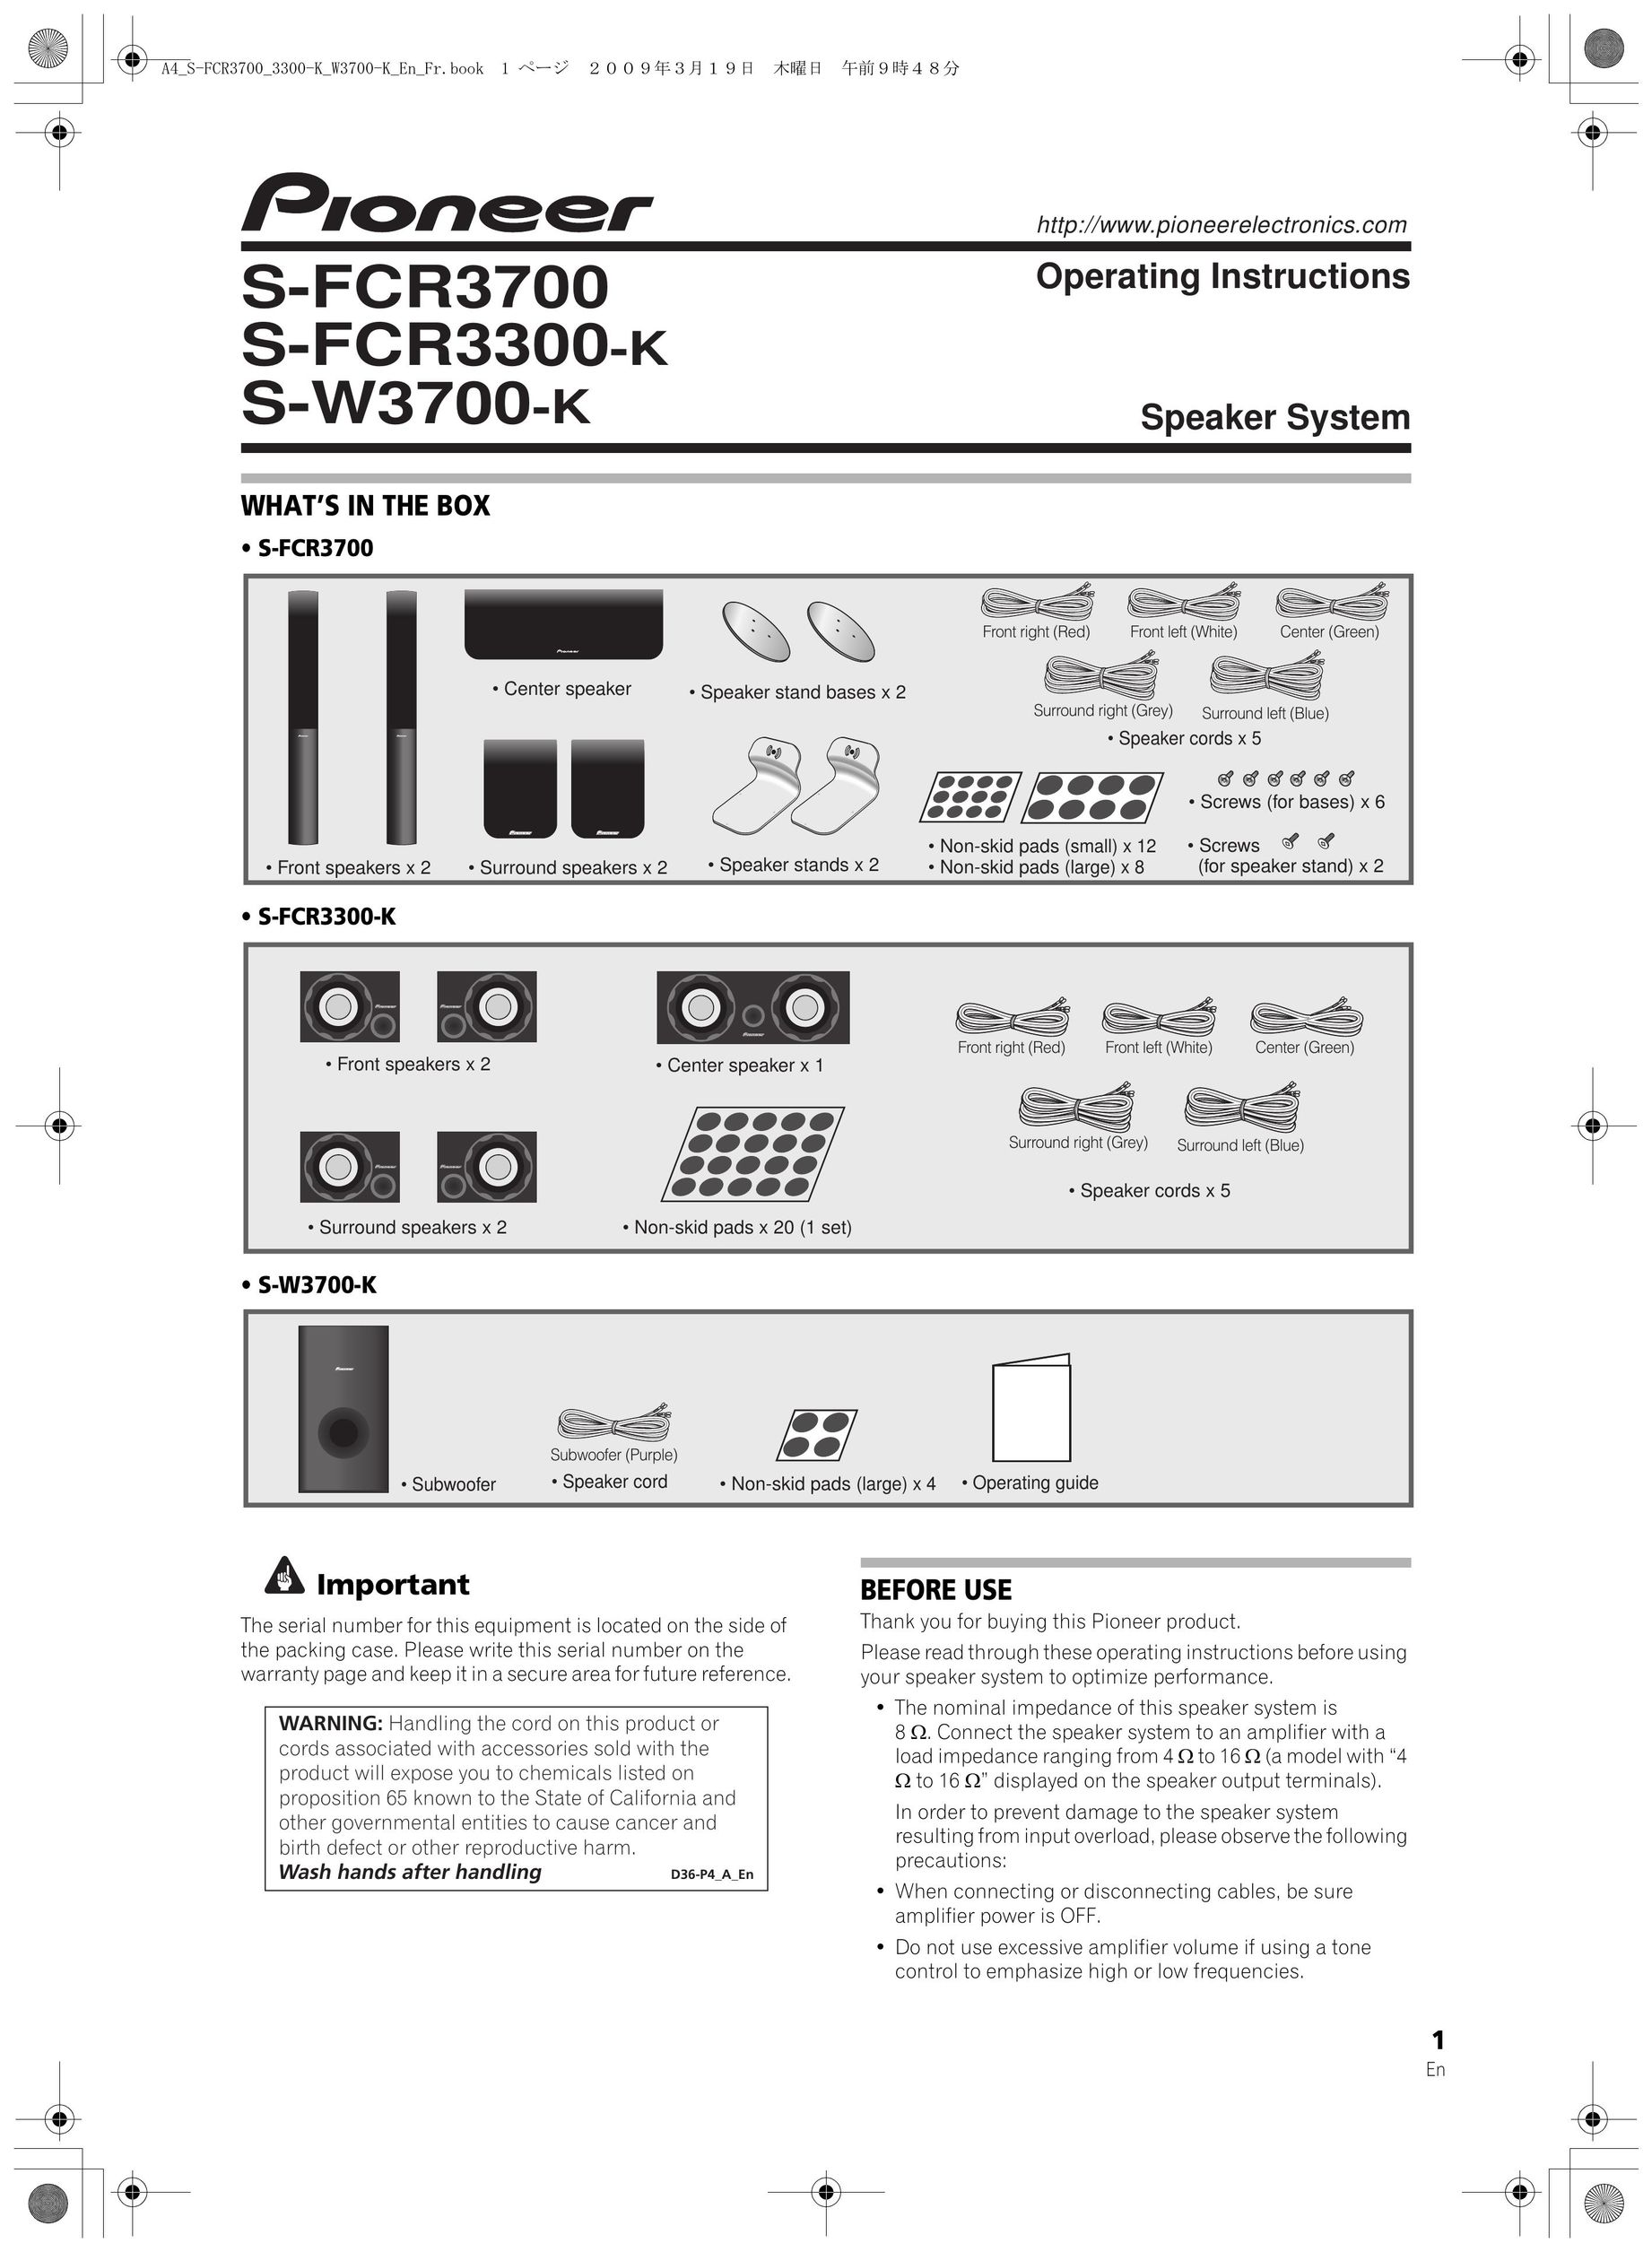 Pioneer S-FCR3300-K Speaker System User Manual